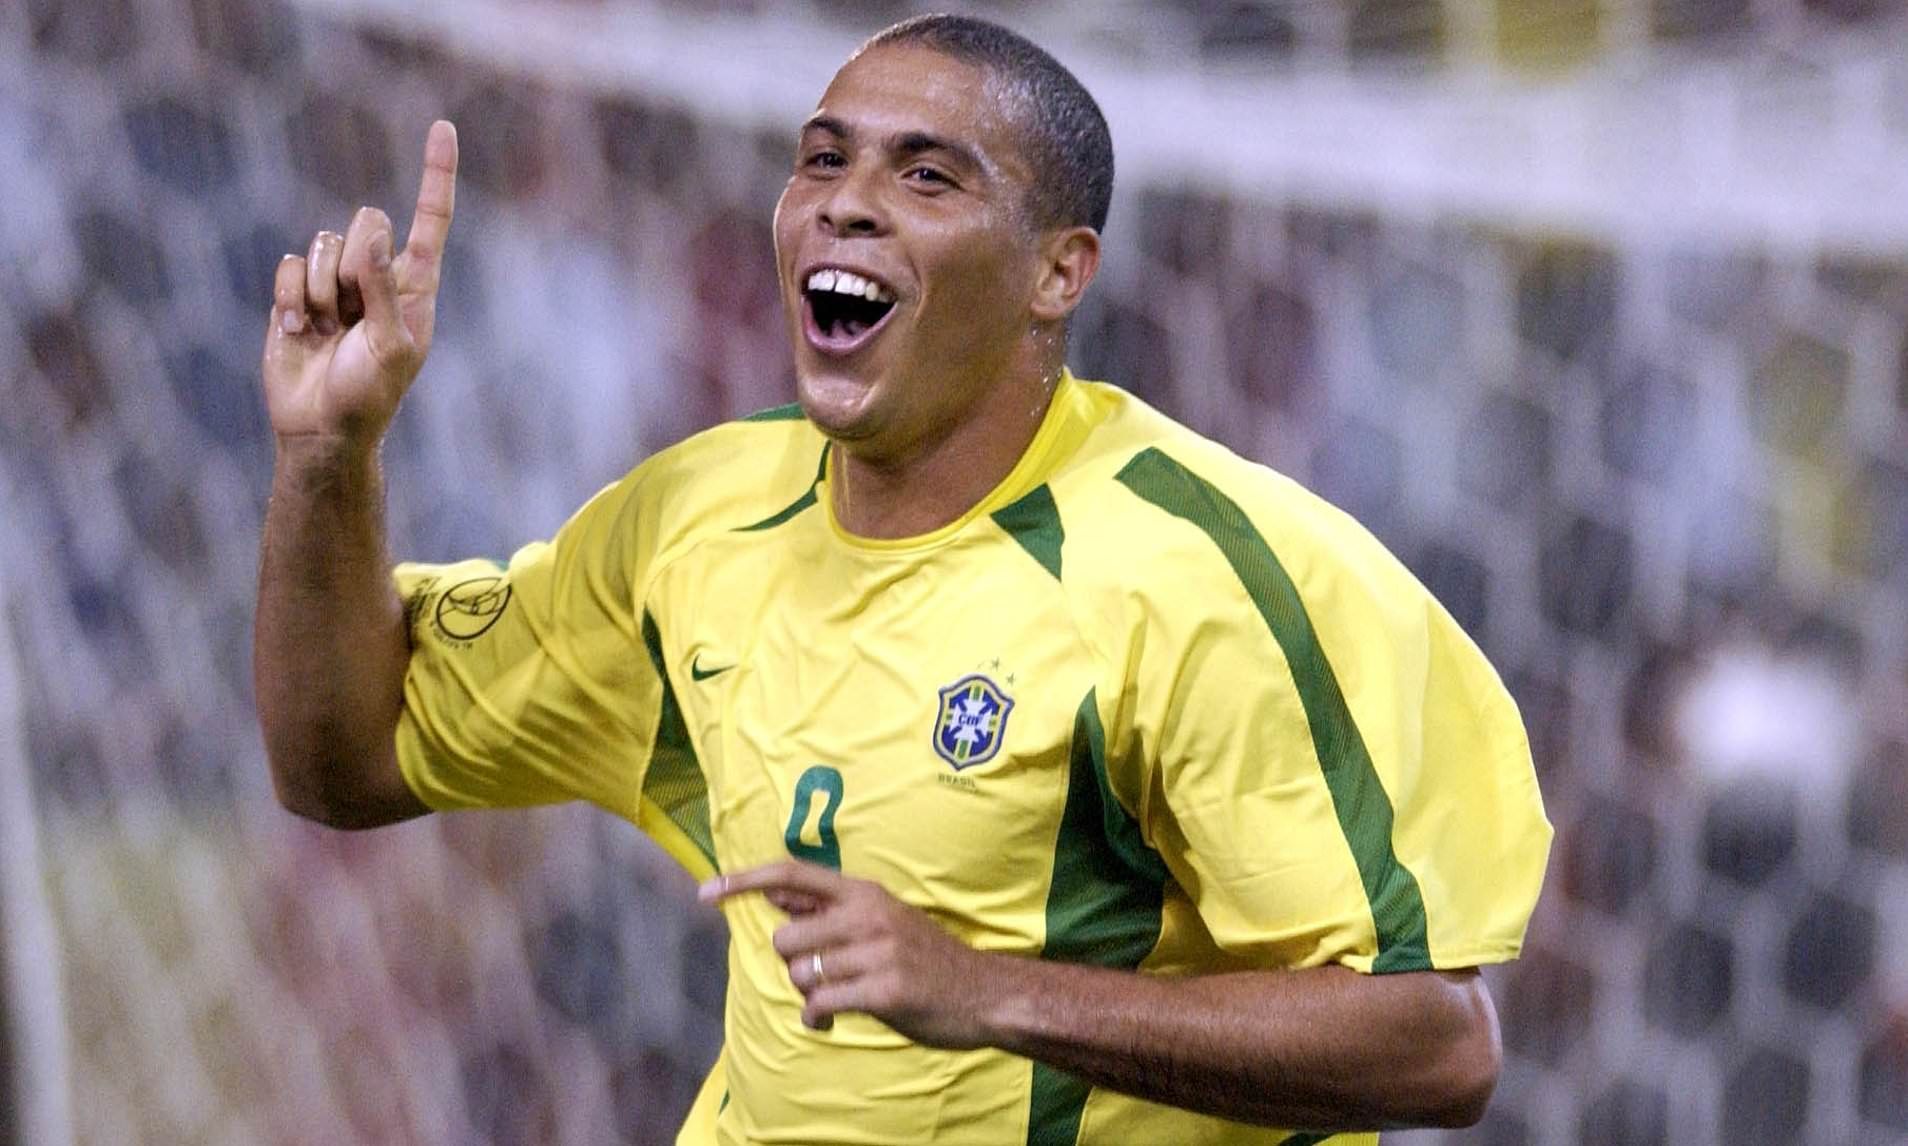 Ronaldo Nazario is football&#039;s all-time greats (Image courtesy: dailymail.co.uk)